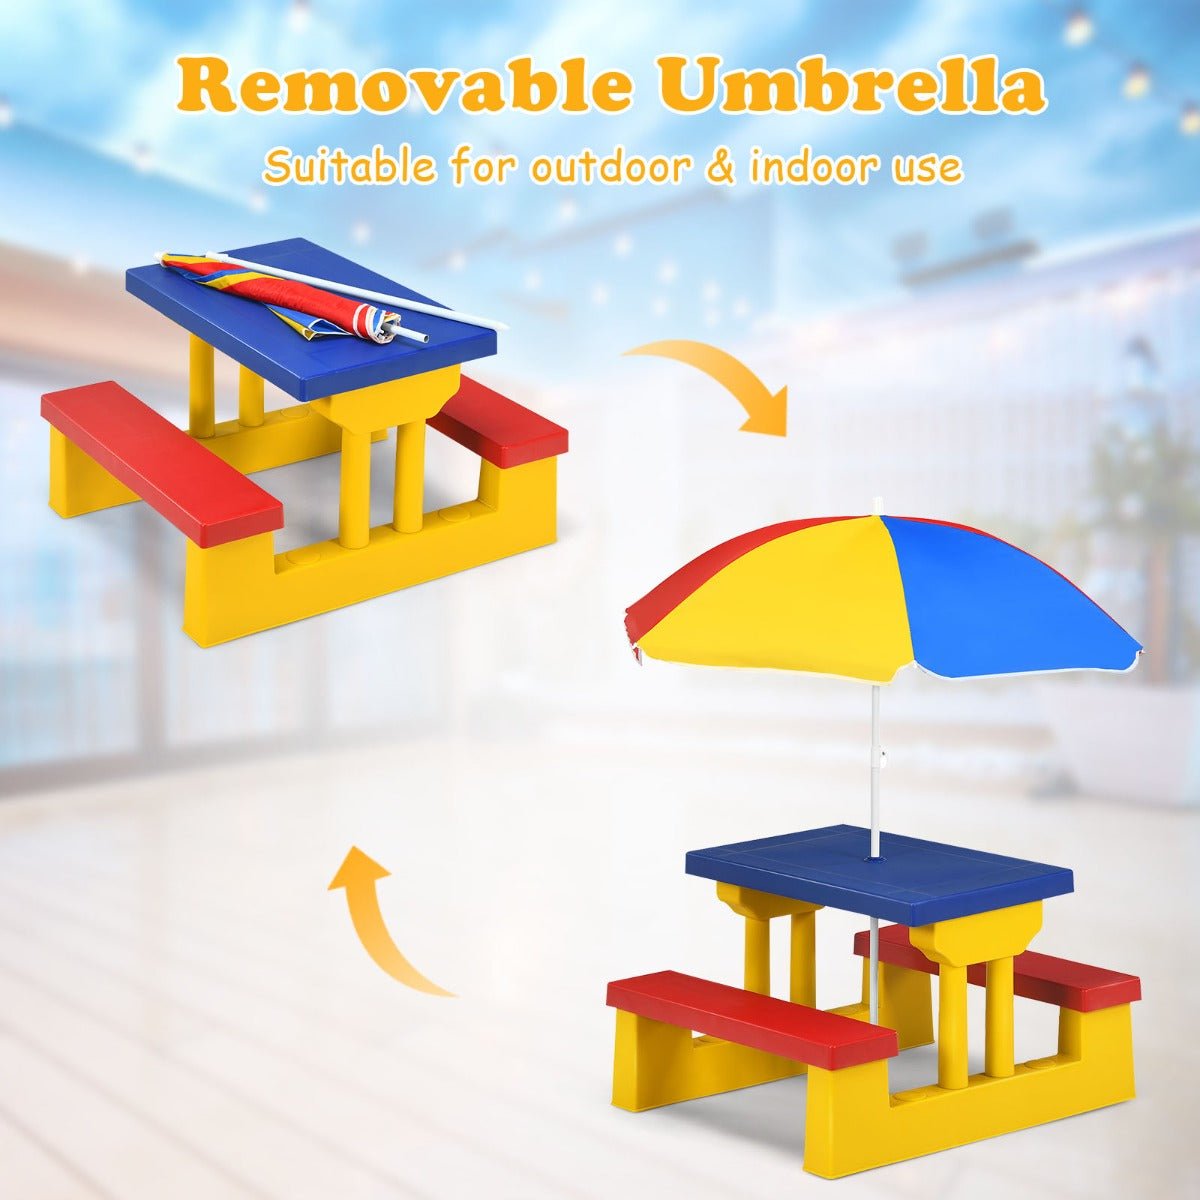 Children's colourful Picnic Time: Removable Umbrella for Sunlit Fun